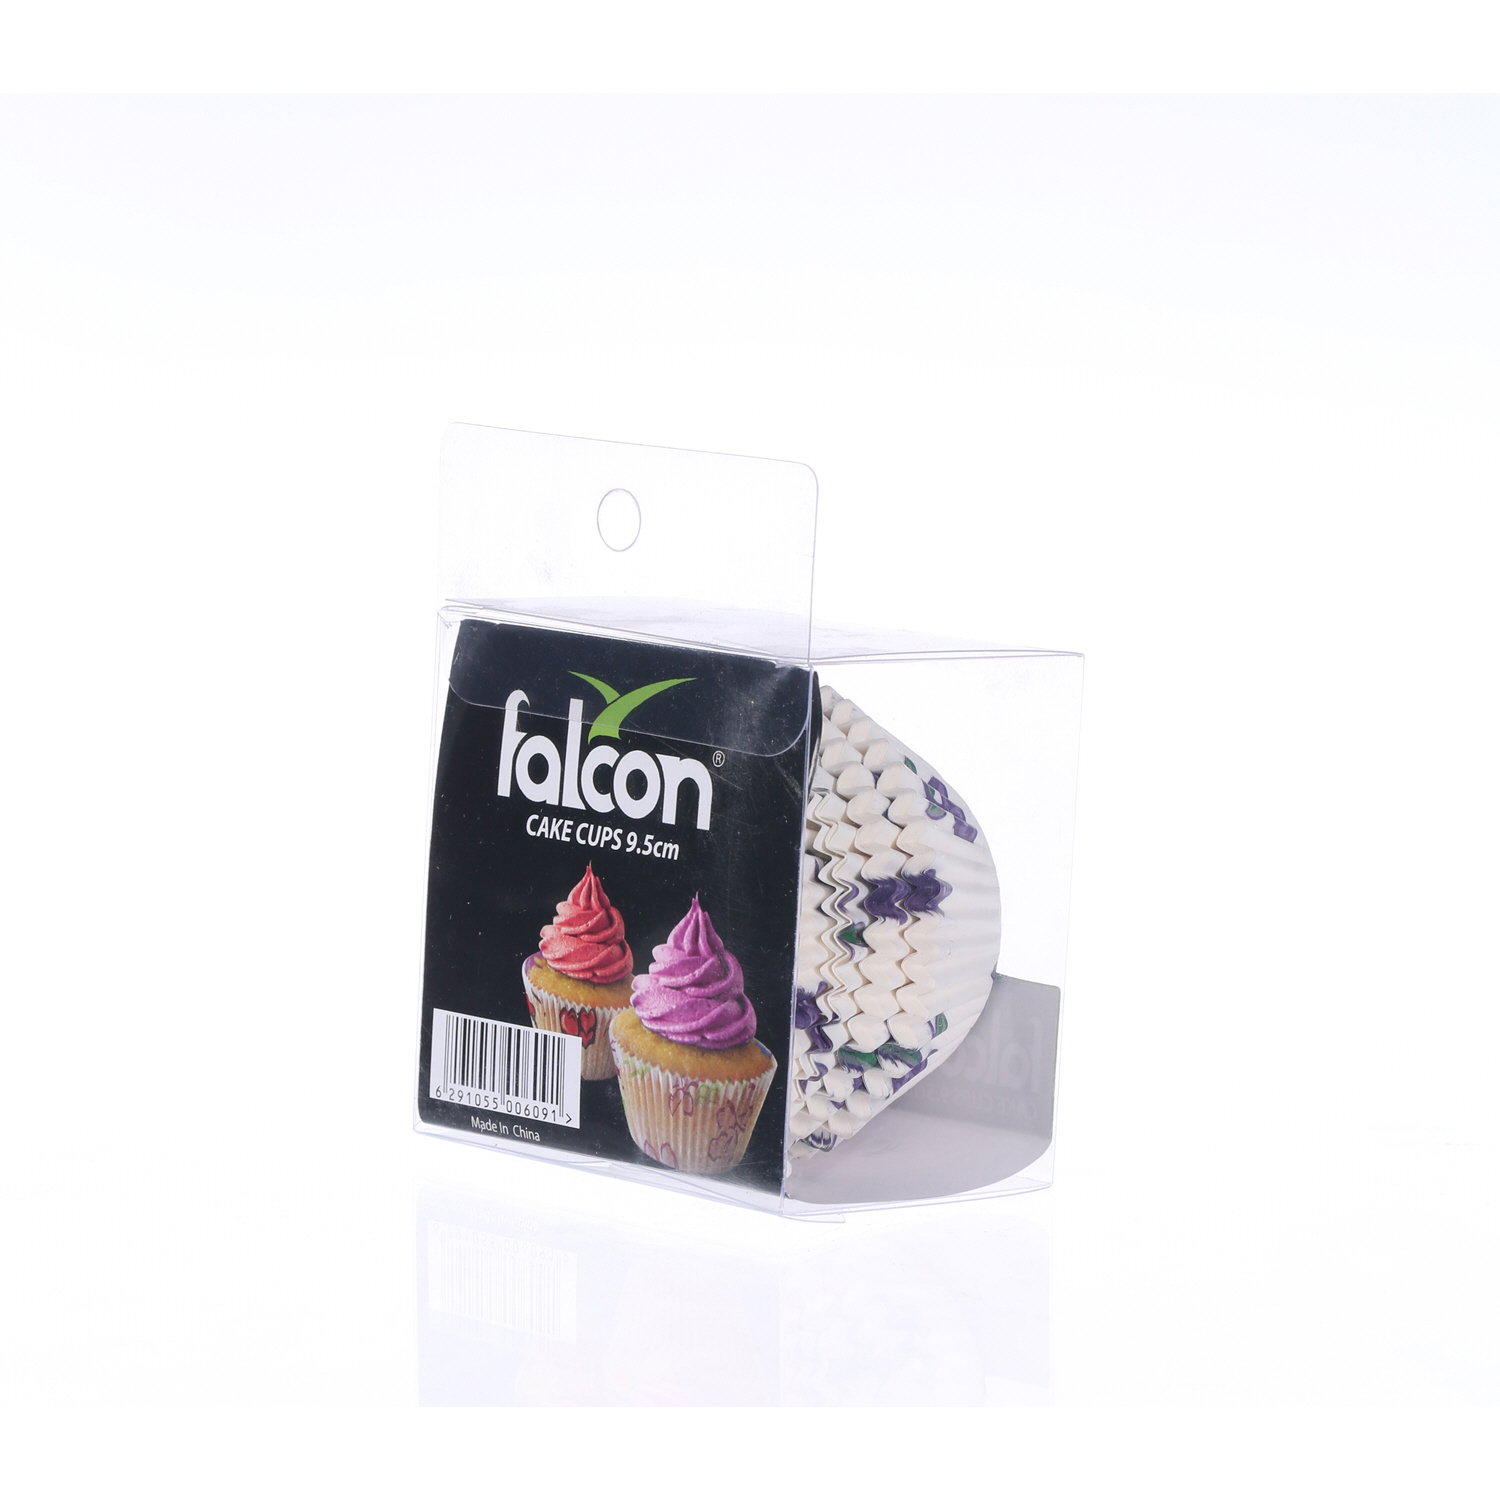 Falcon Retail Cake Cups Design 9.5 cm